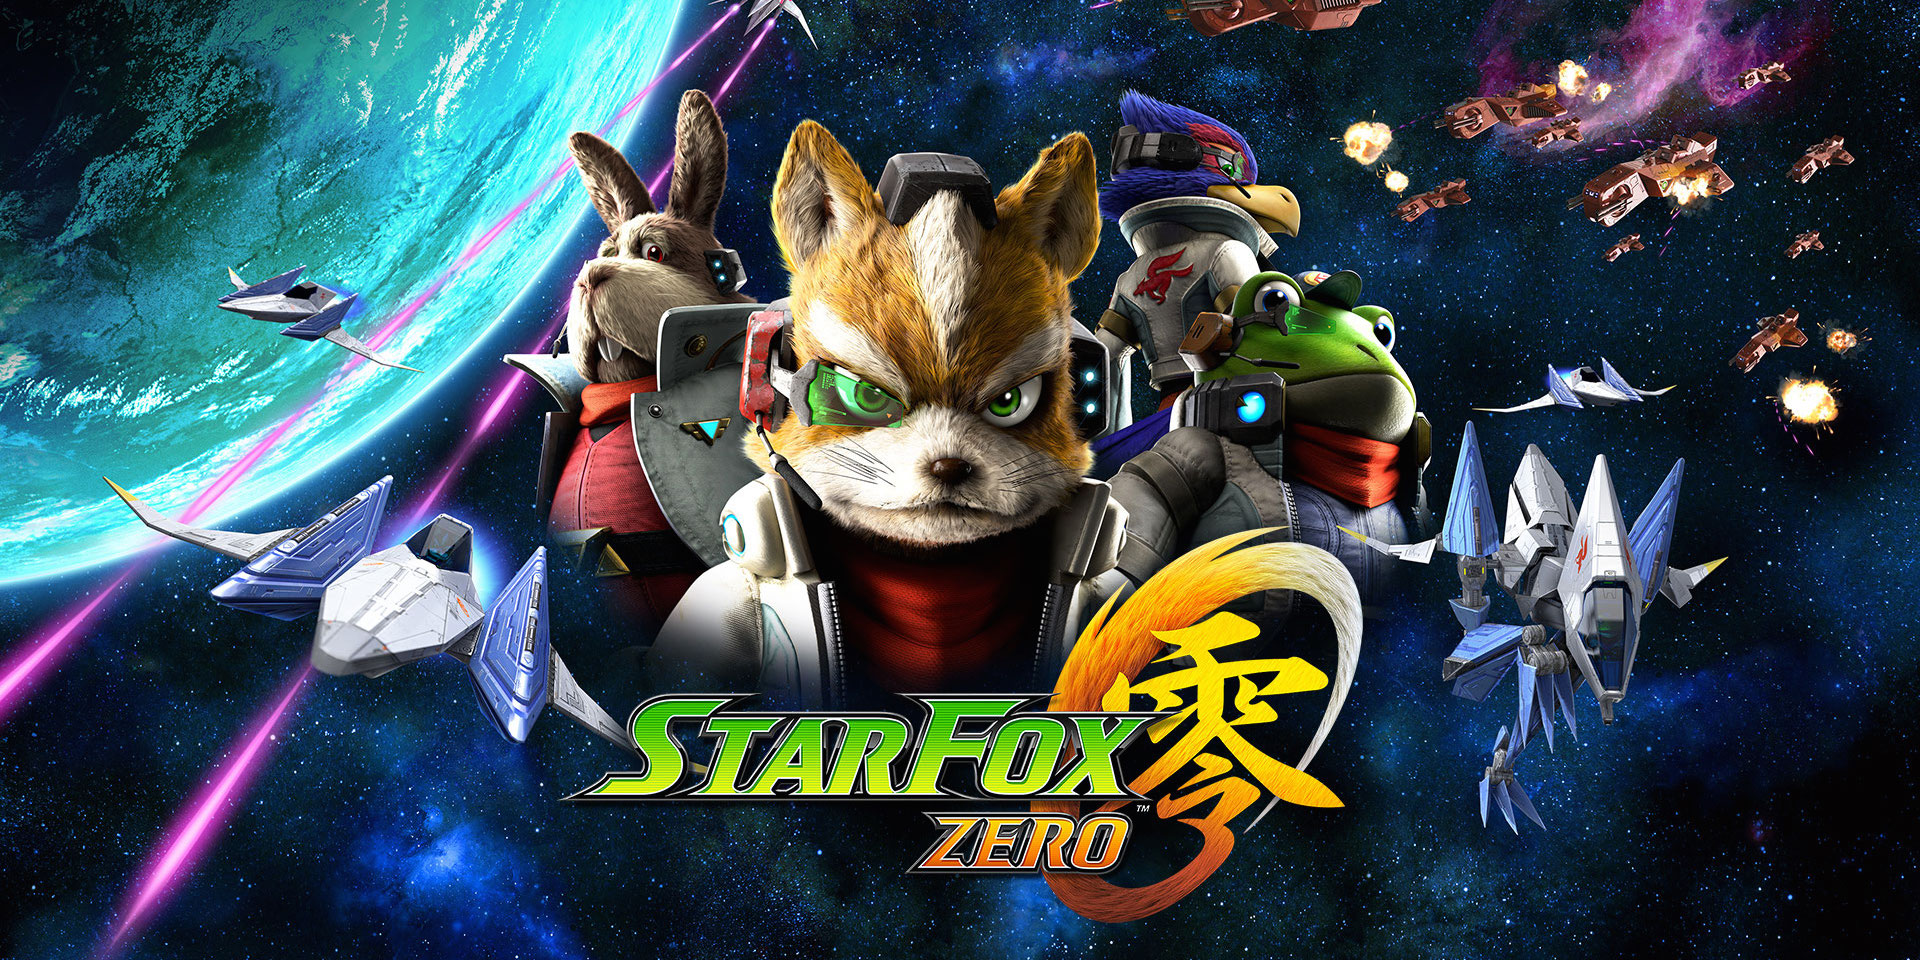  Star Fox Guard : Video Games